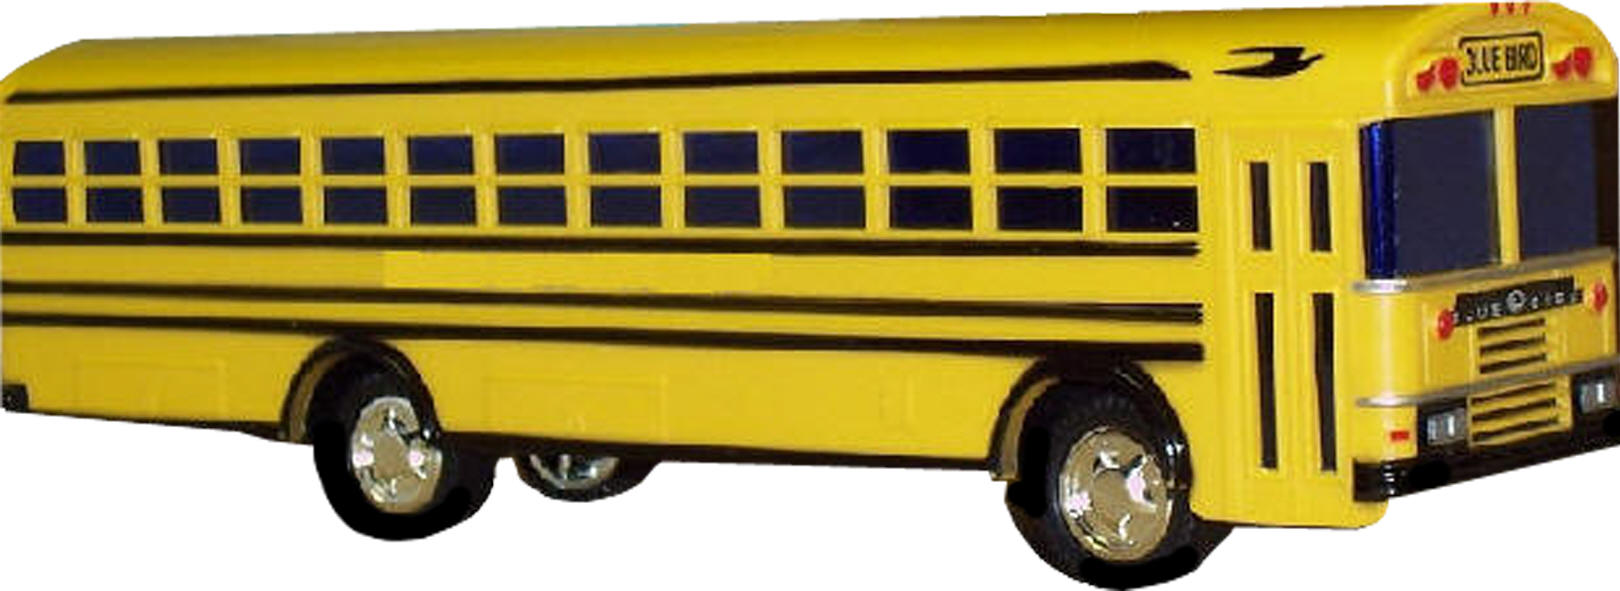 Blue Bird Model School Bus| model,